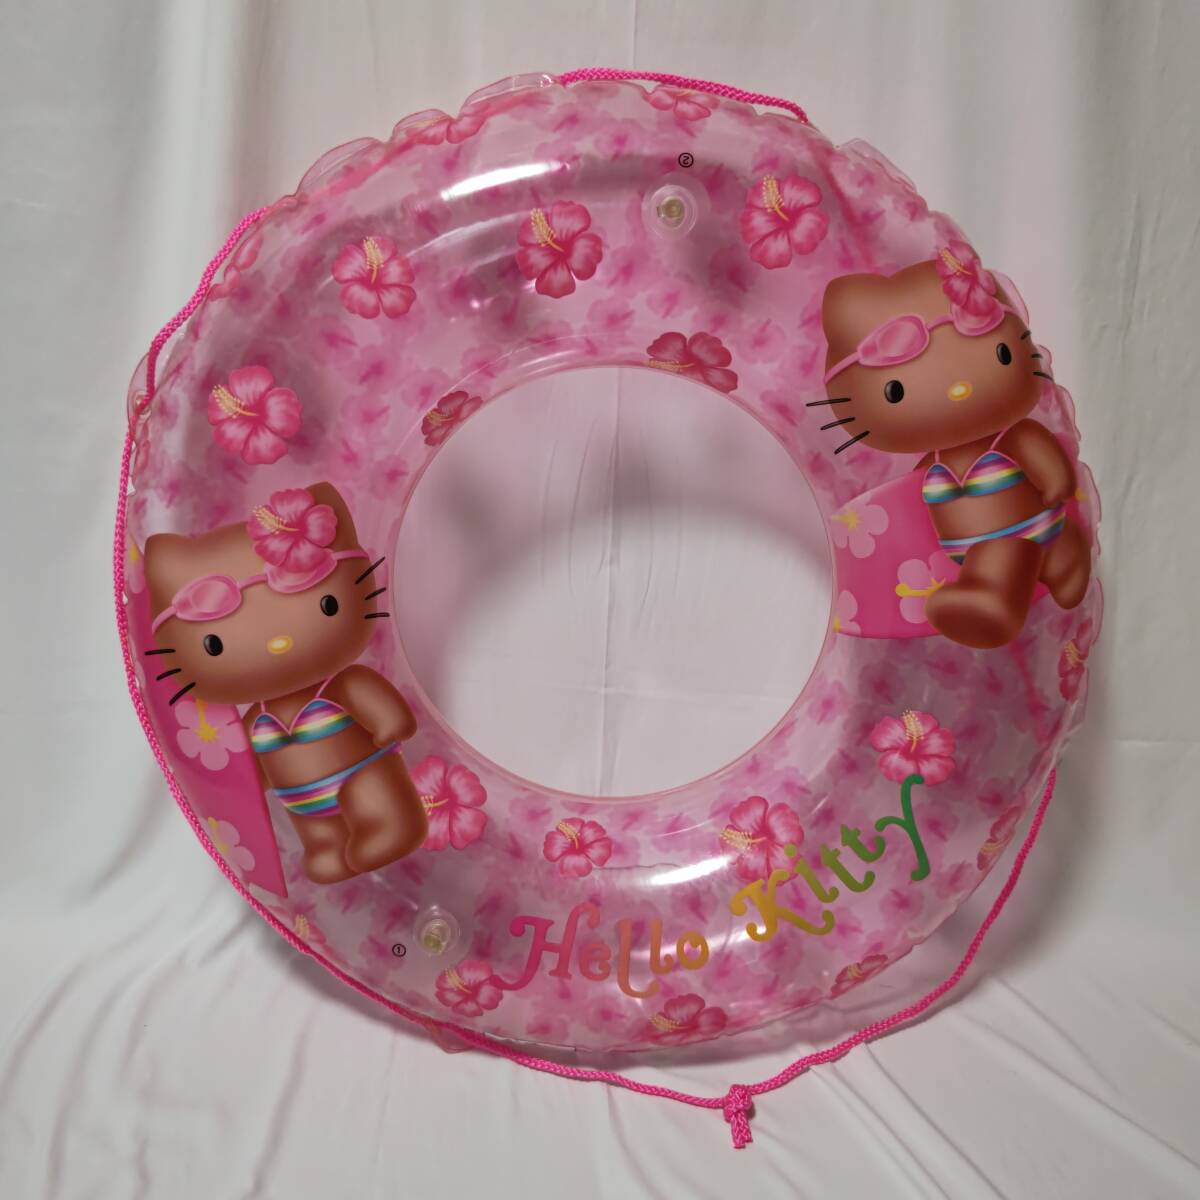  Hello Kitty надувной круг 90cm 2002 год модели 